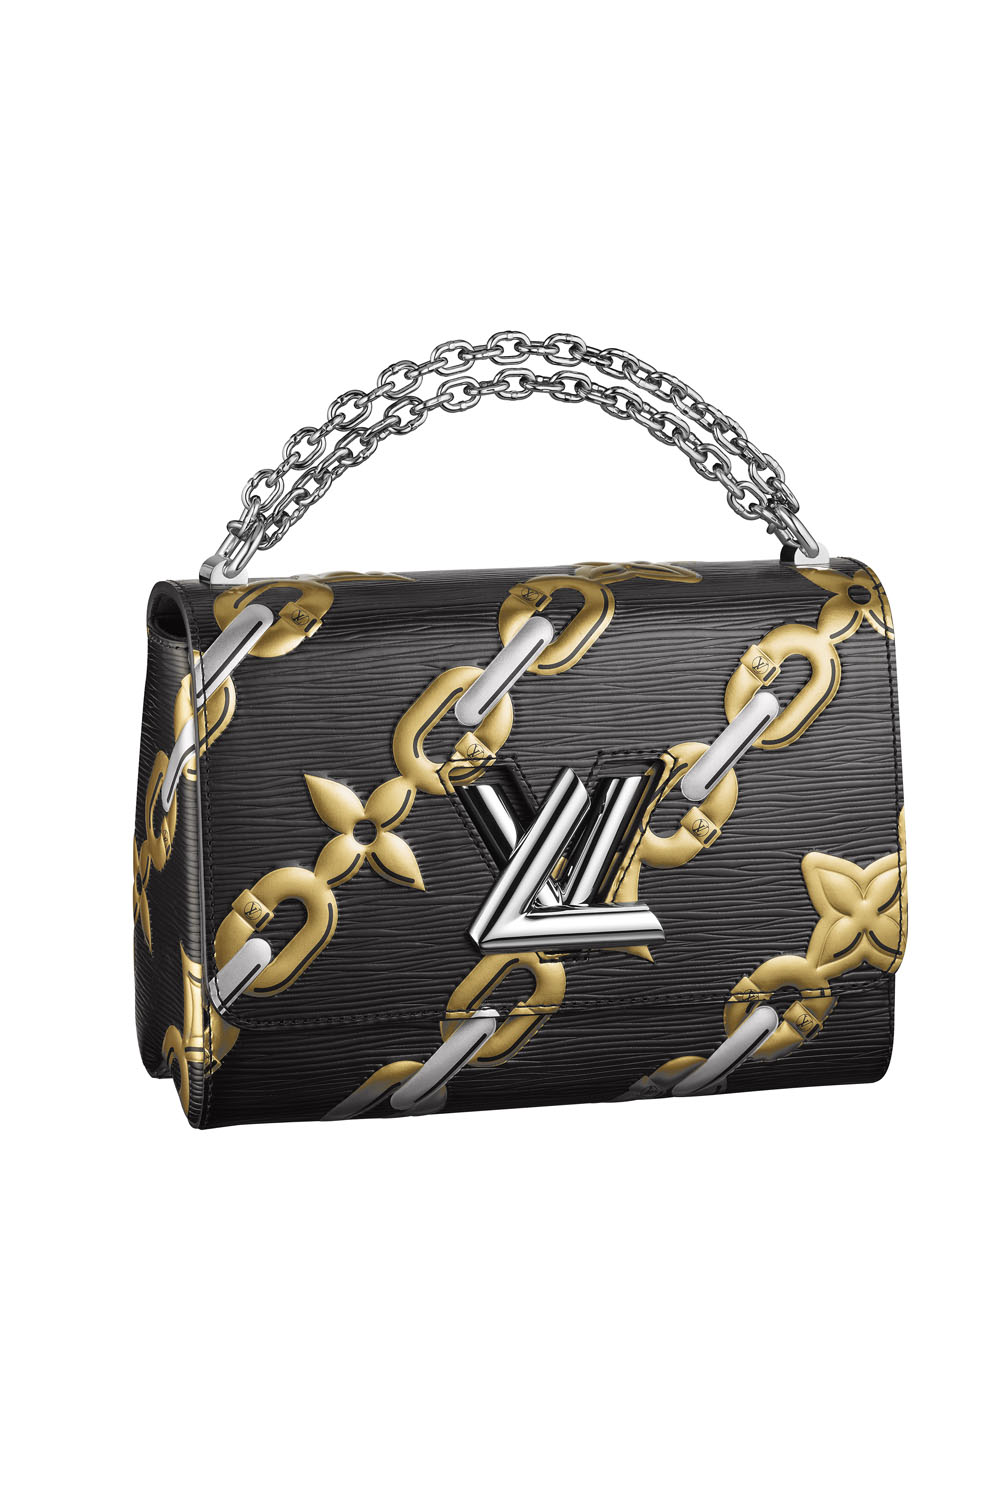 Bag, $5,950, by Louis Vuitton.